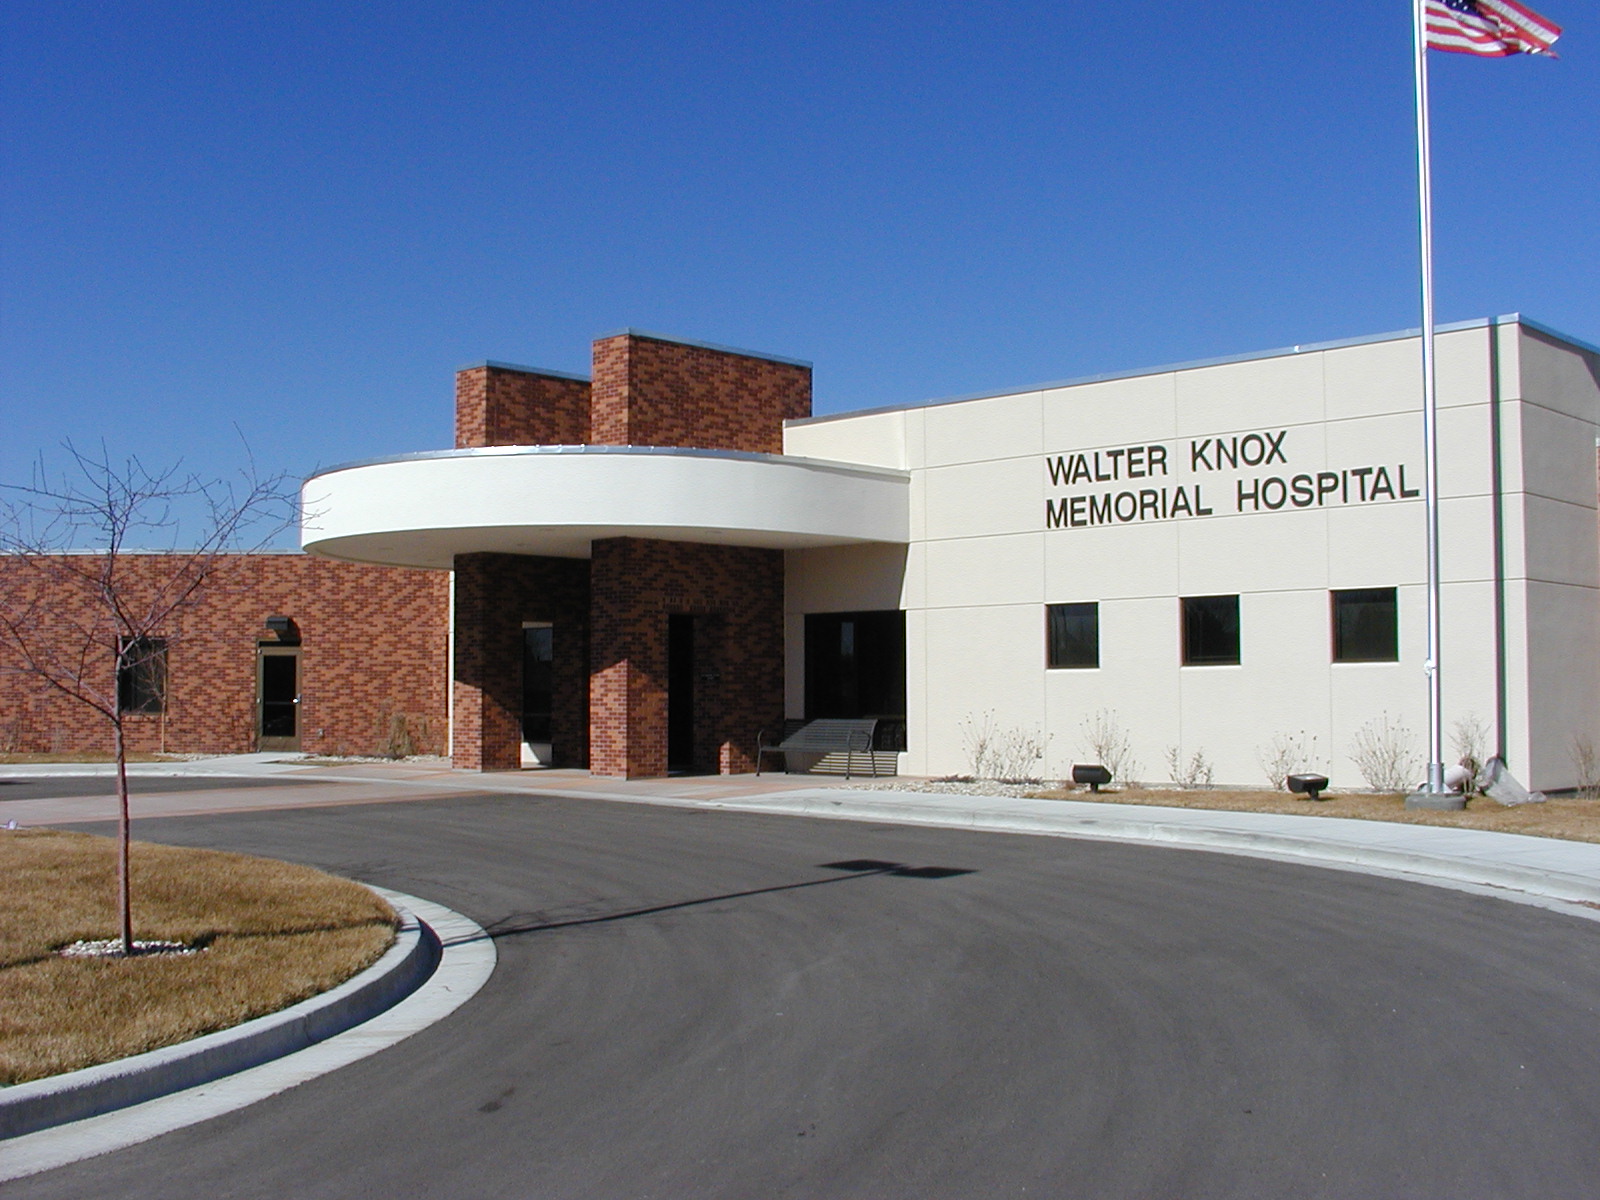 Walter Knox Memorial Hospital